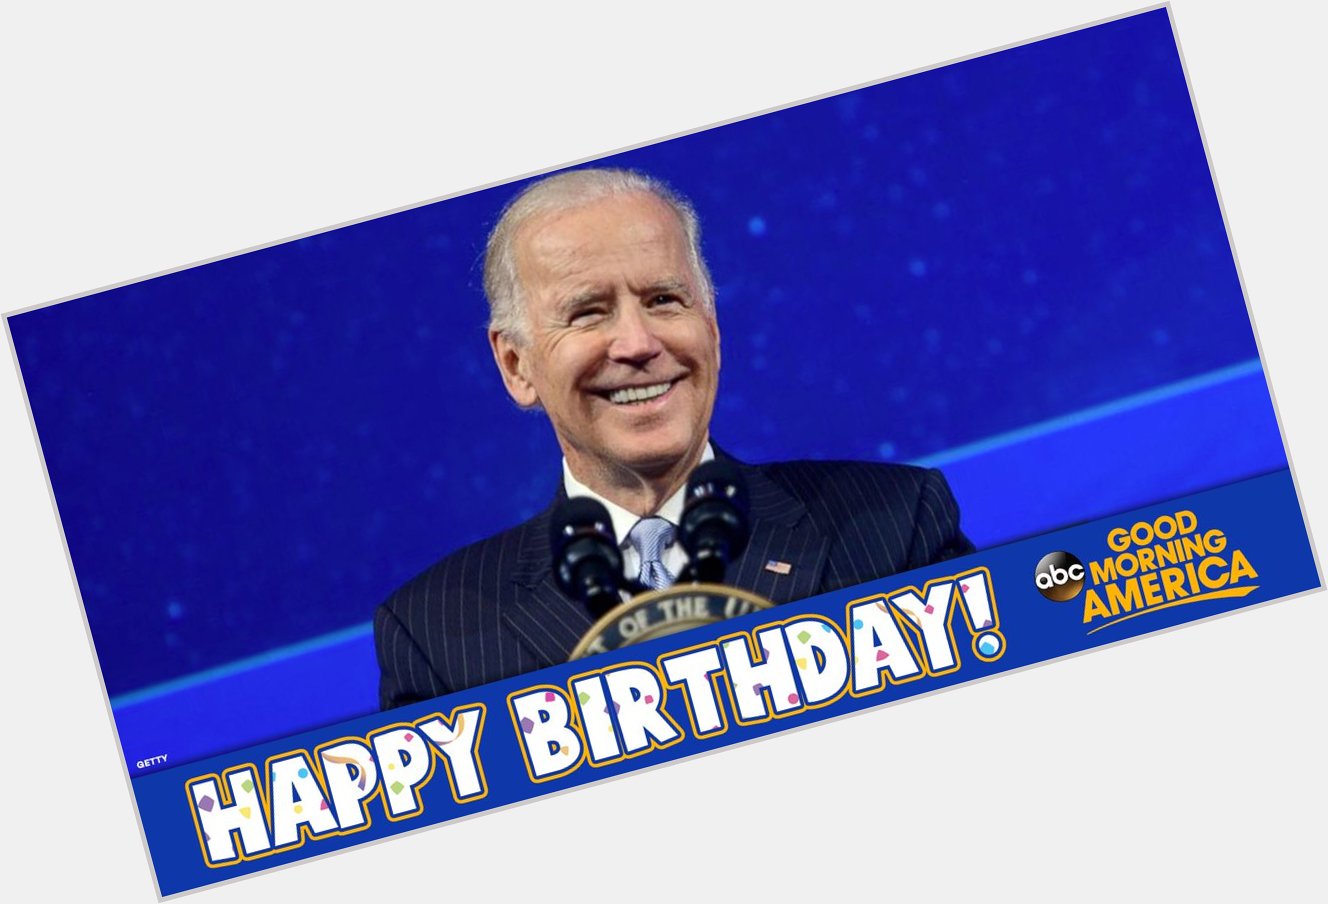 Happy Birthday to Joe Biden!  